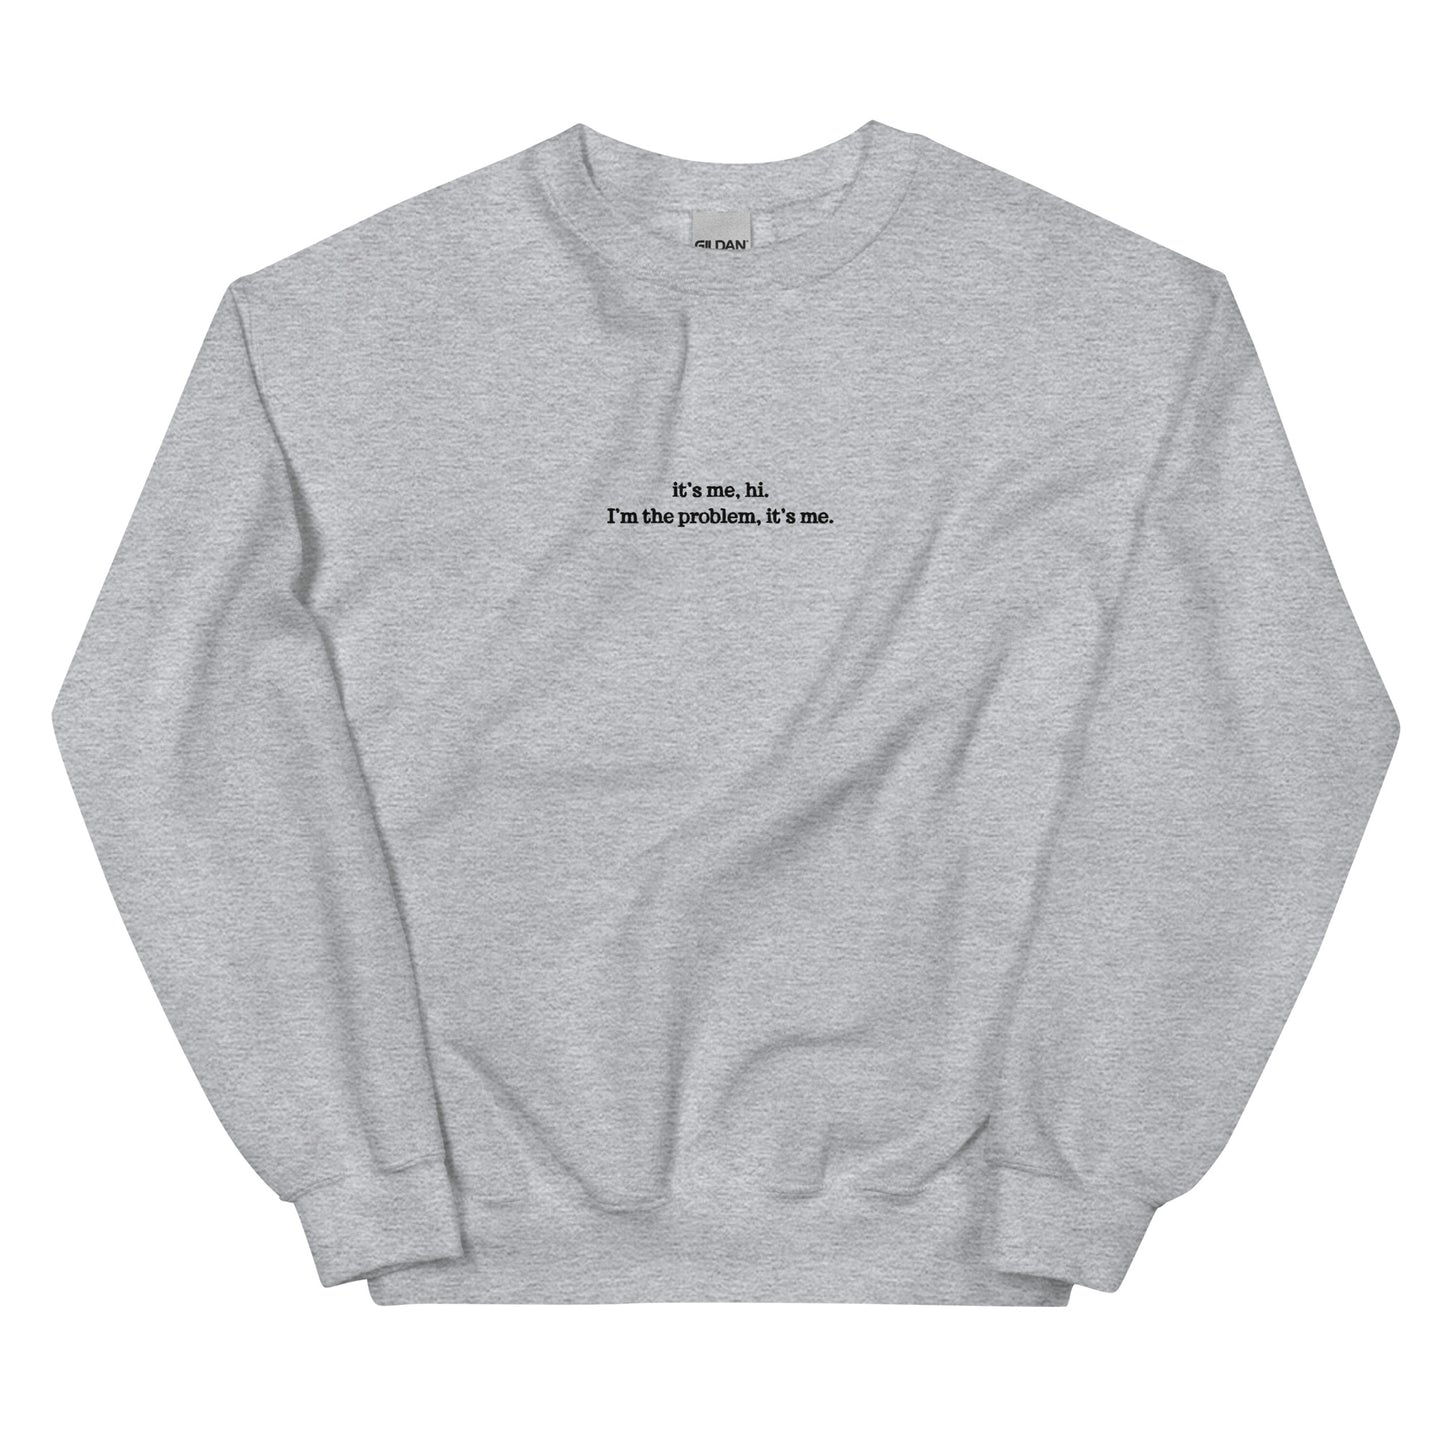 it’s me, hi. - Embroidered Crew Sweatshirt